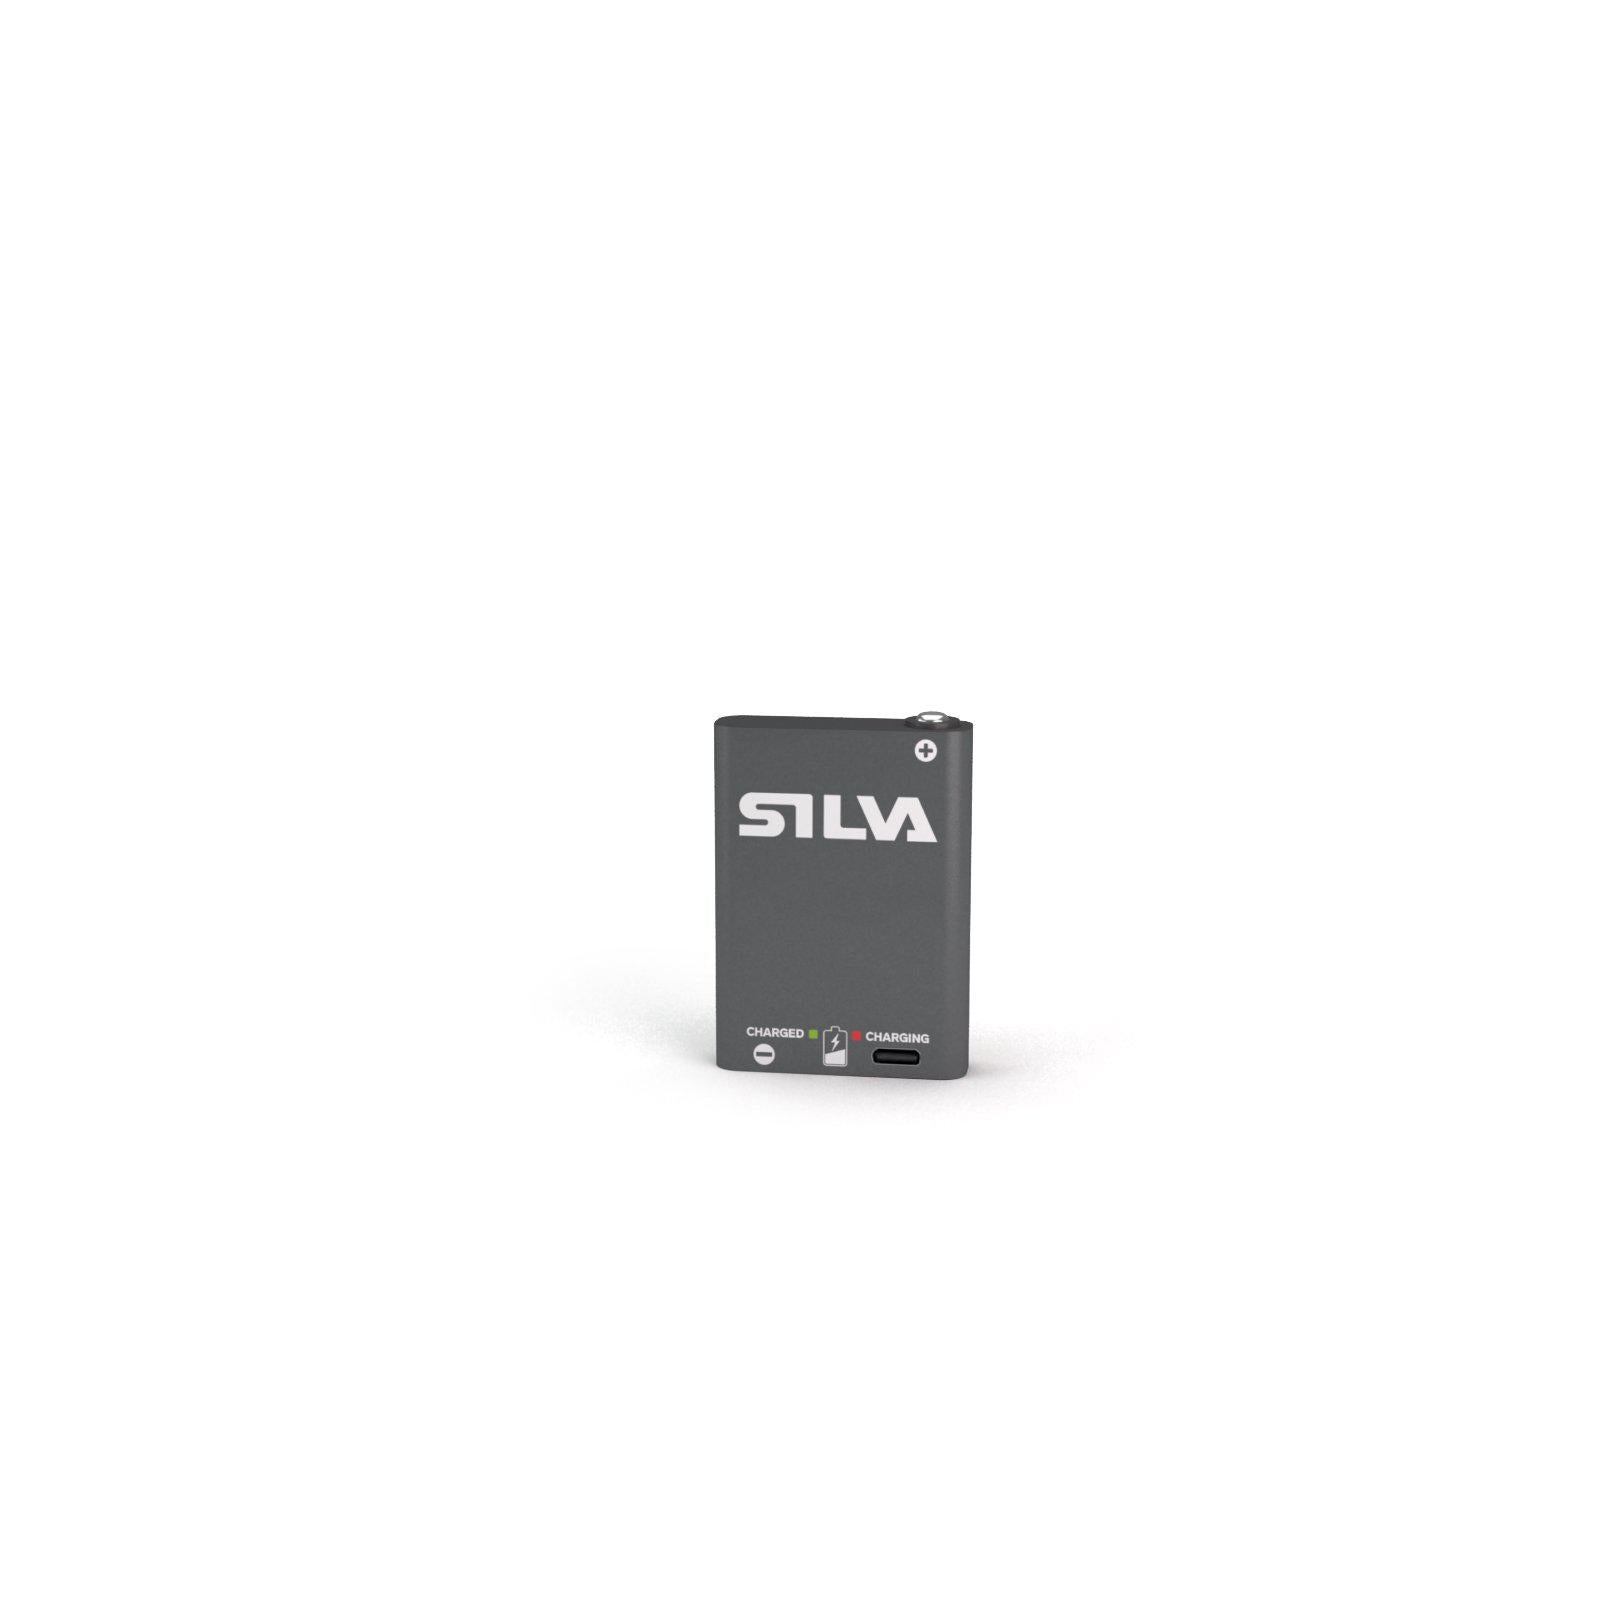 SILVA Headlamp Battery Hybrid 4.6Wh